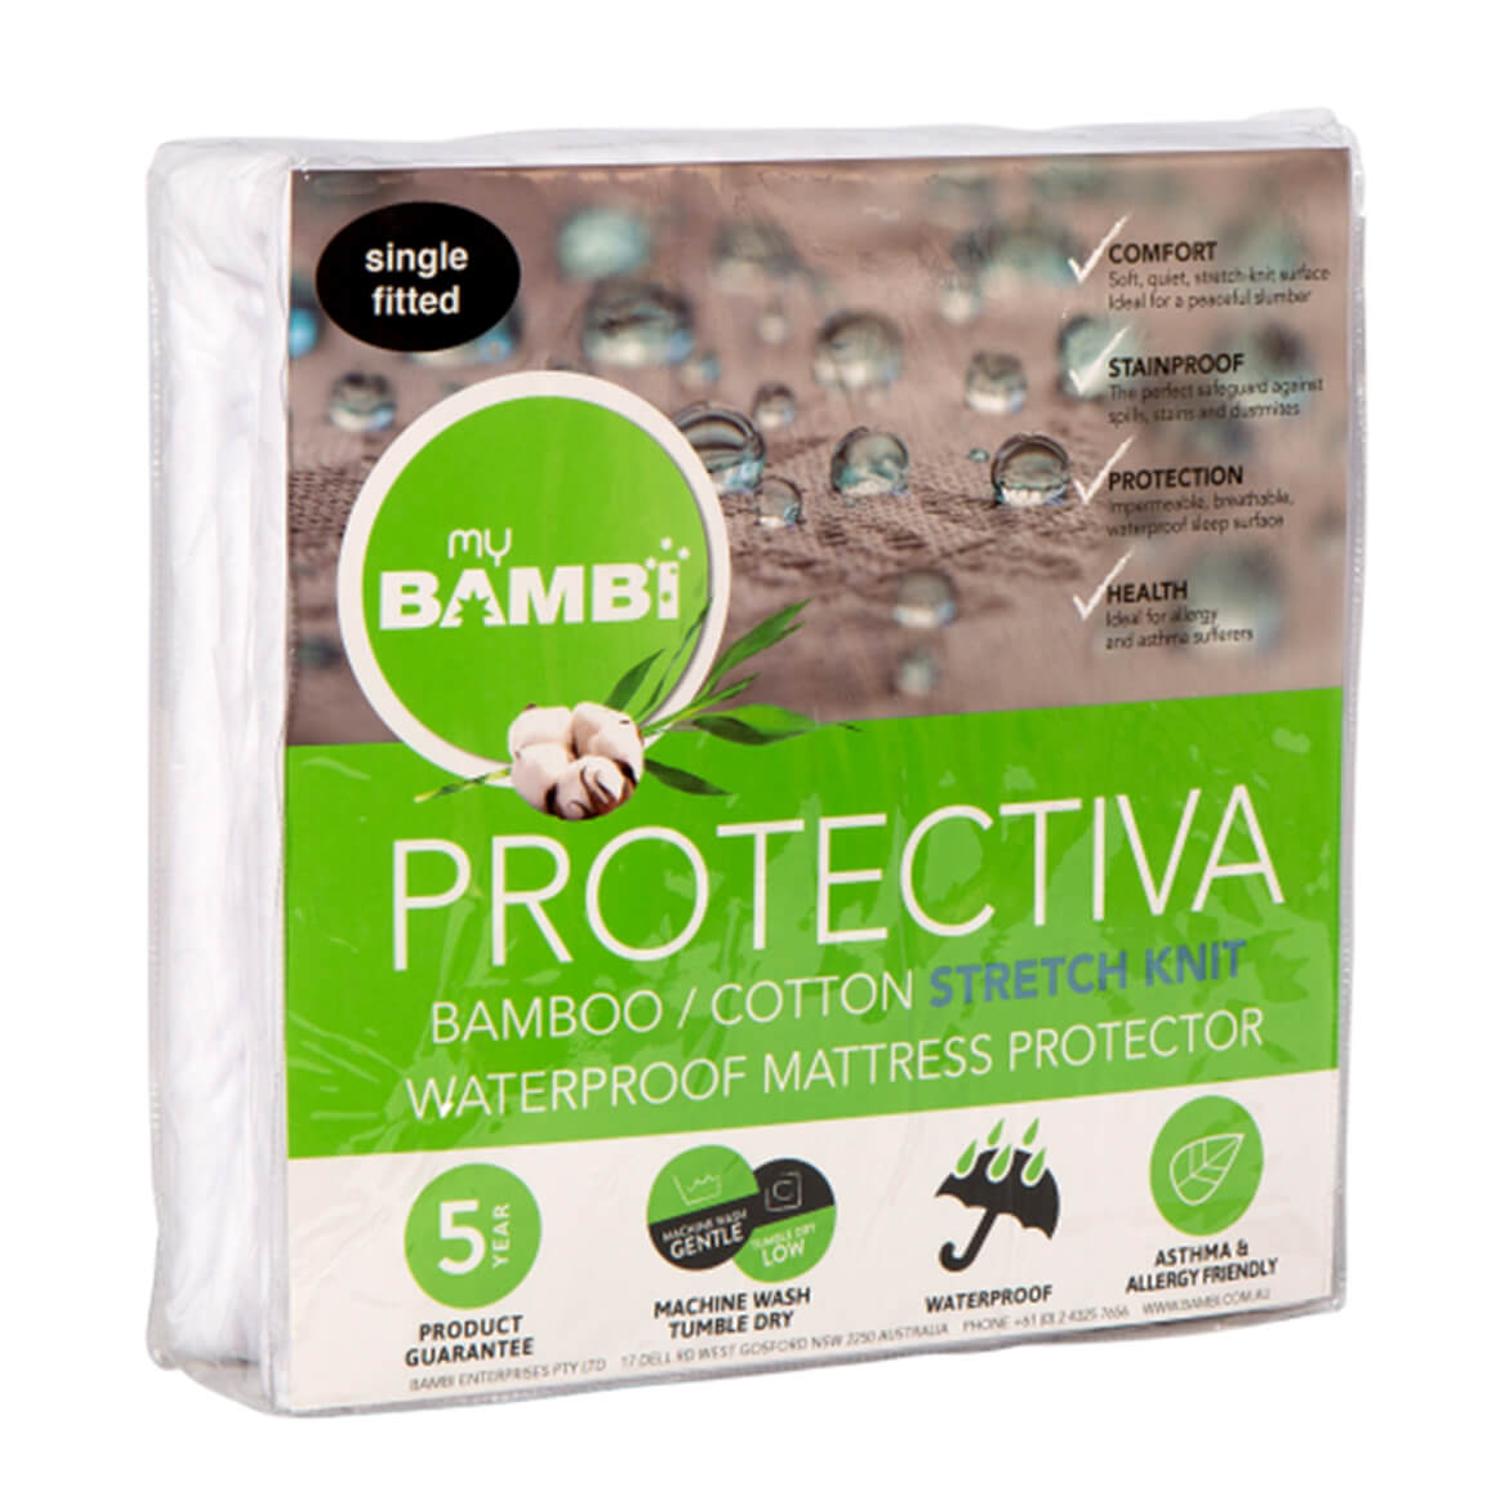 Protectiva Cotton and Bamboo Mattress Protector